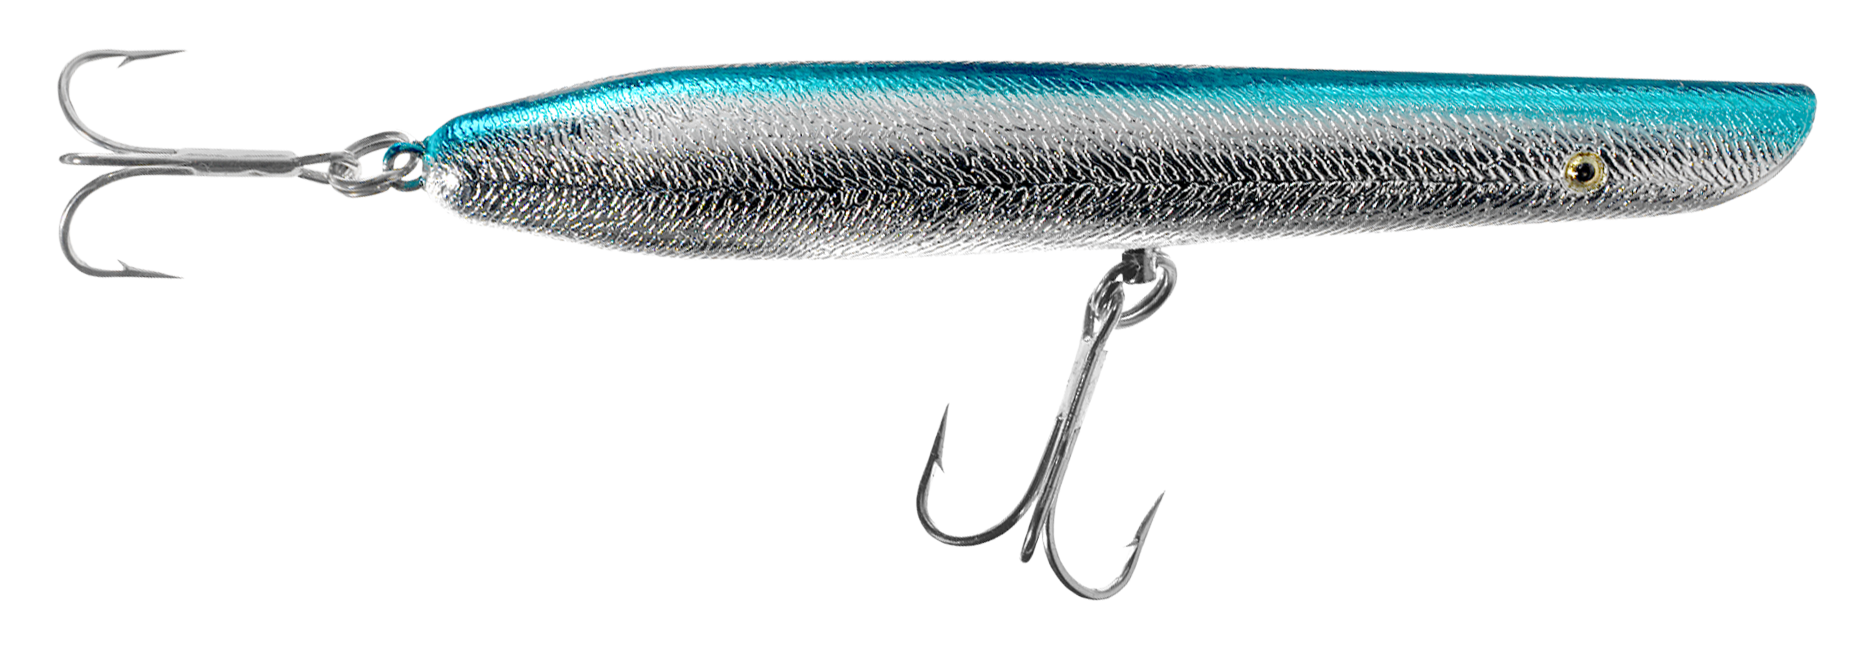 Cotton Cordell Pencil Popper Fishing Lure - Chrome/Black Back - 7 in